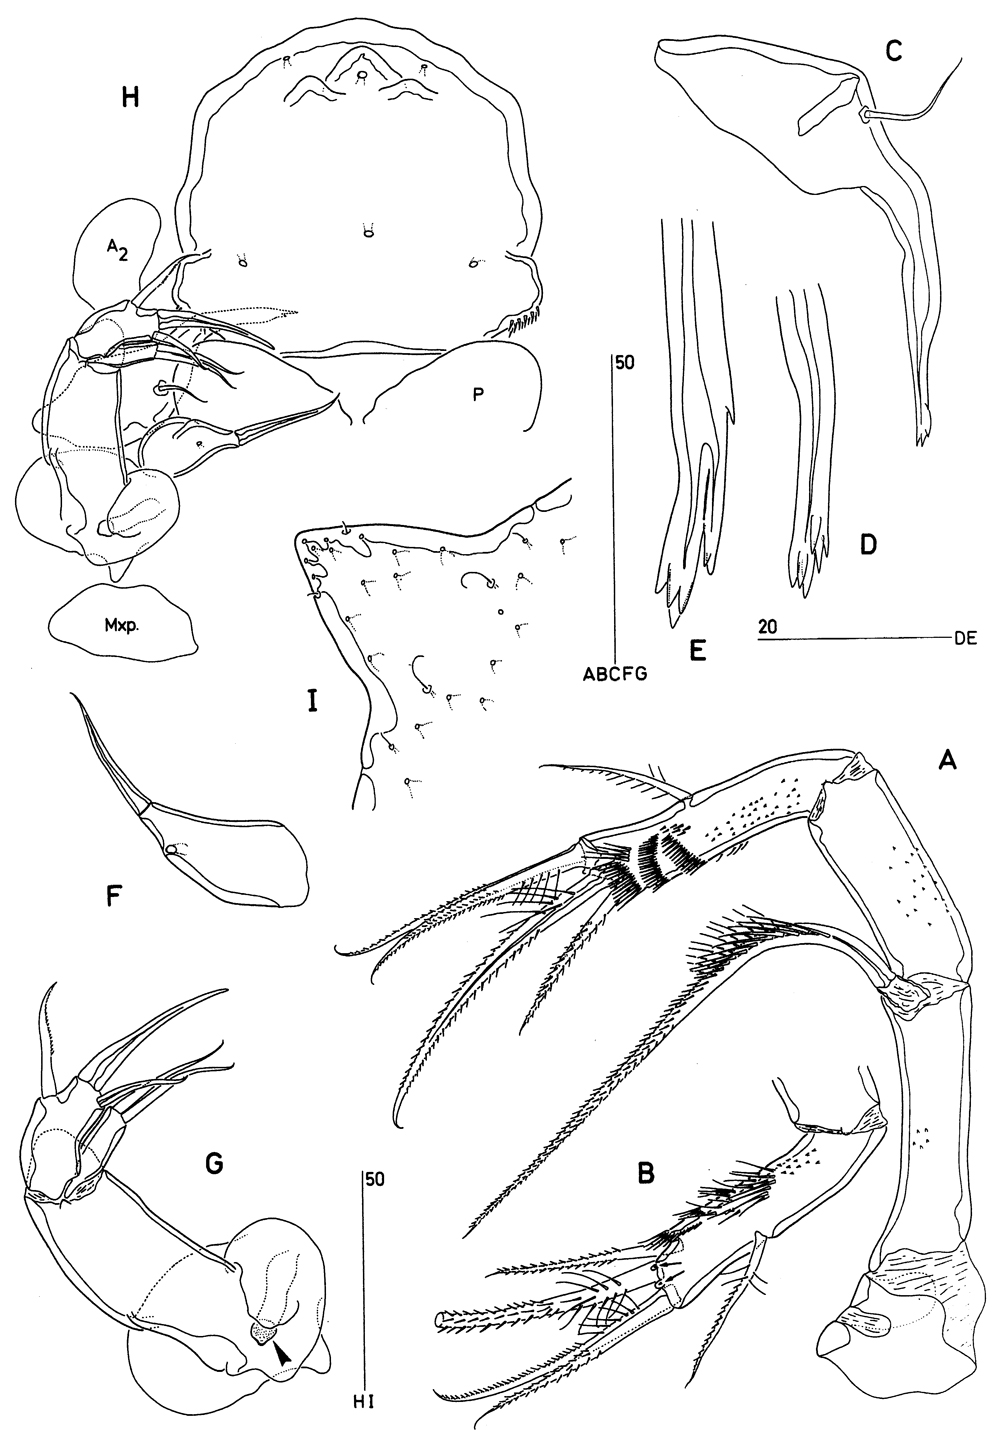 Species Goniopsyllus clausi - Plate 3 of morphological figures